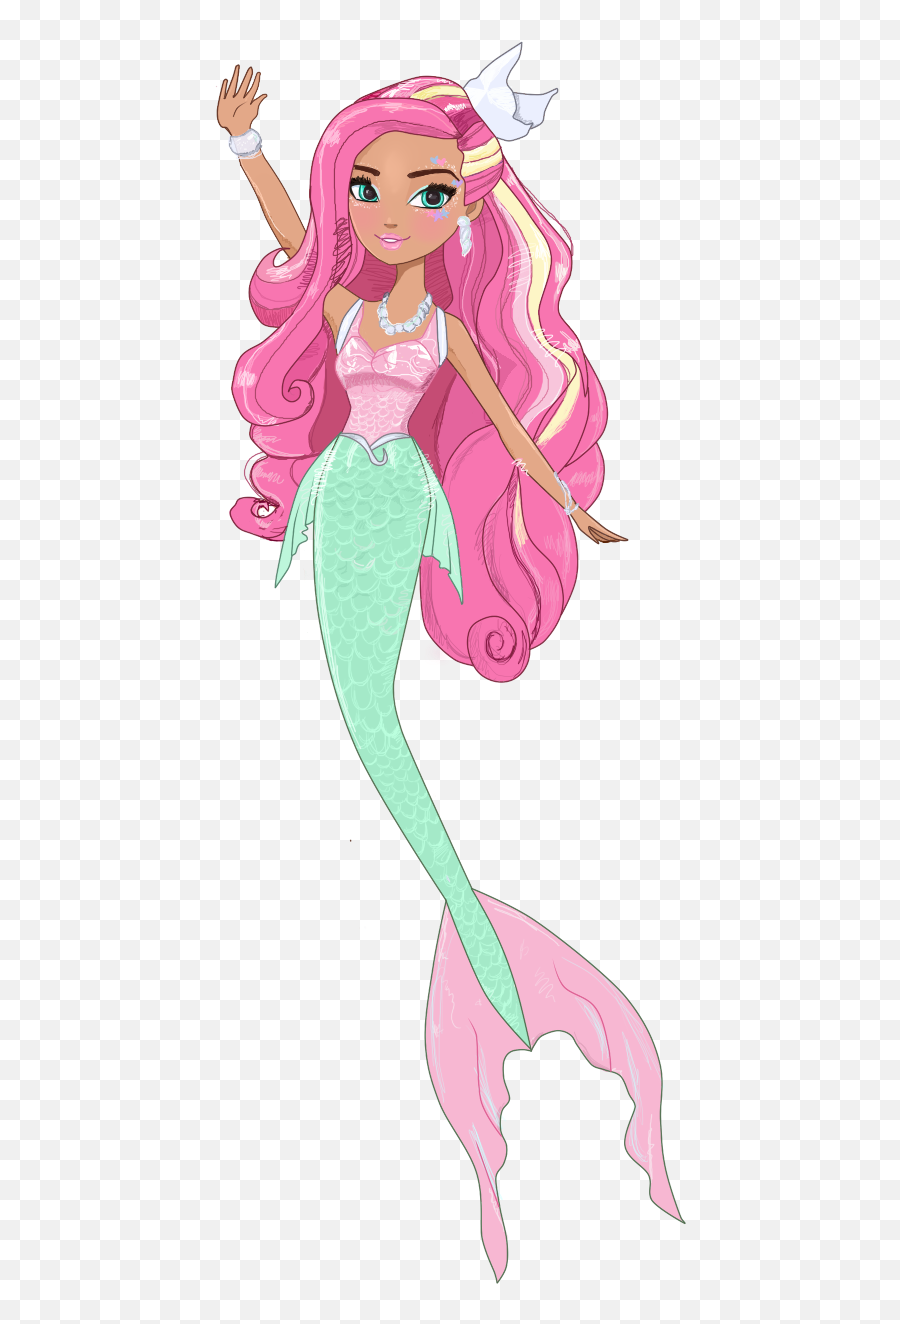 Mermaid Png Transparent Images - Cartoon Pictures Of Mermaids,Mermaid Transparent Background